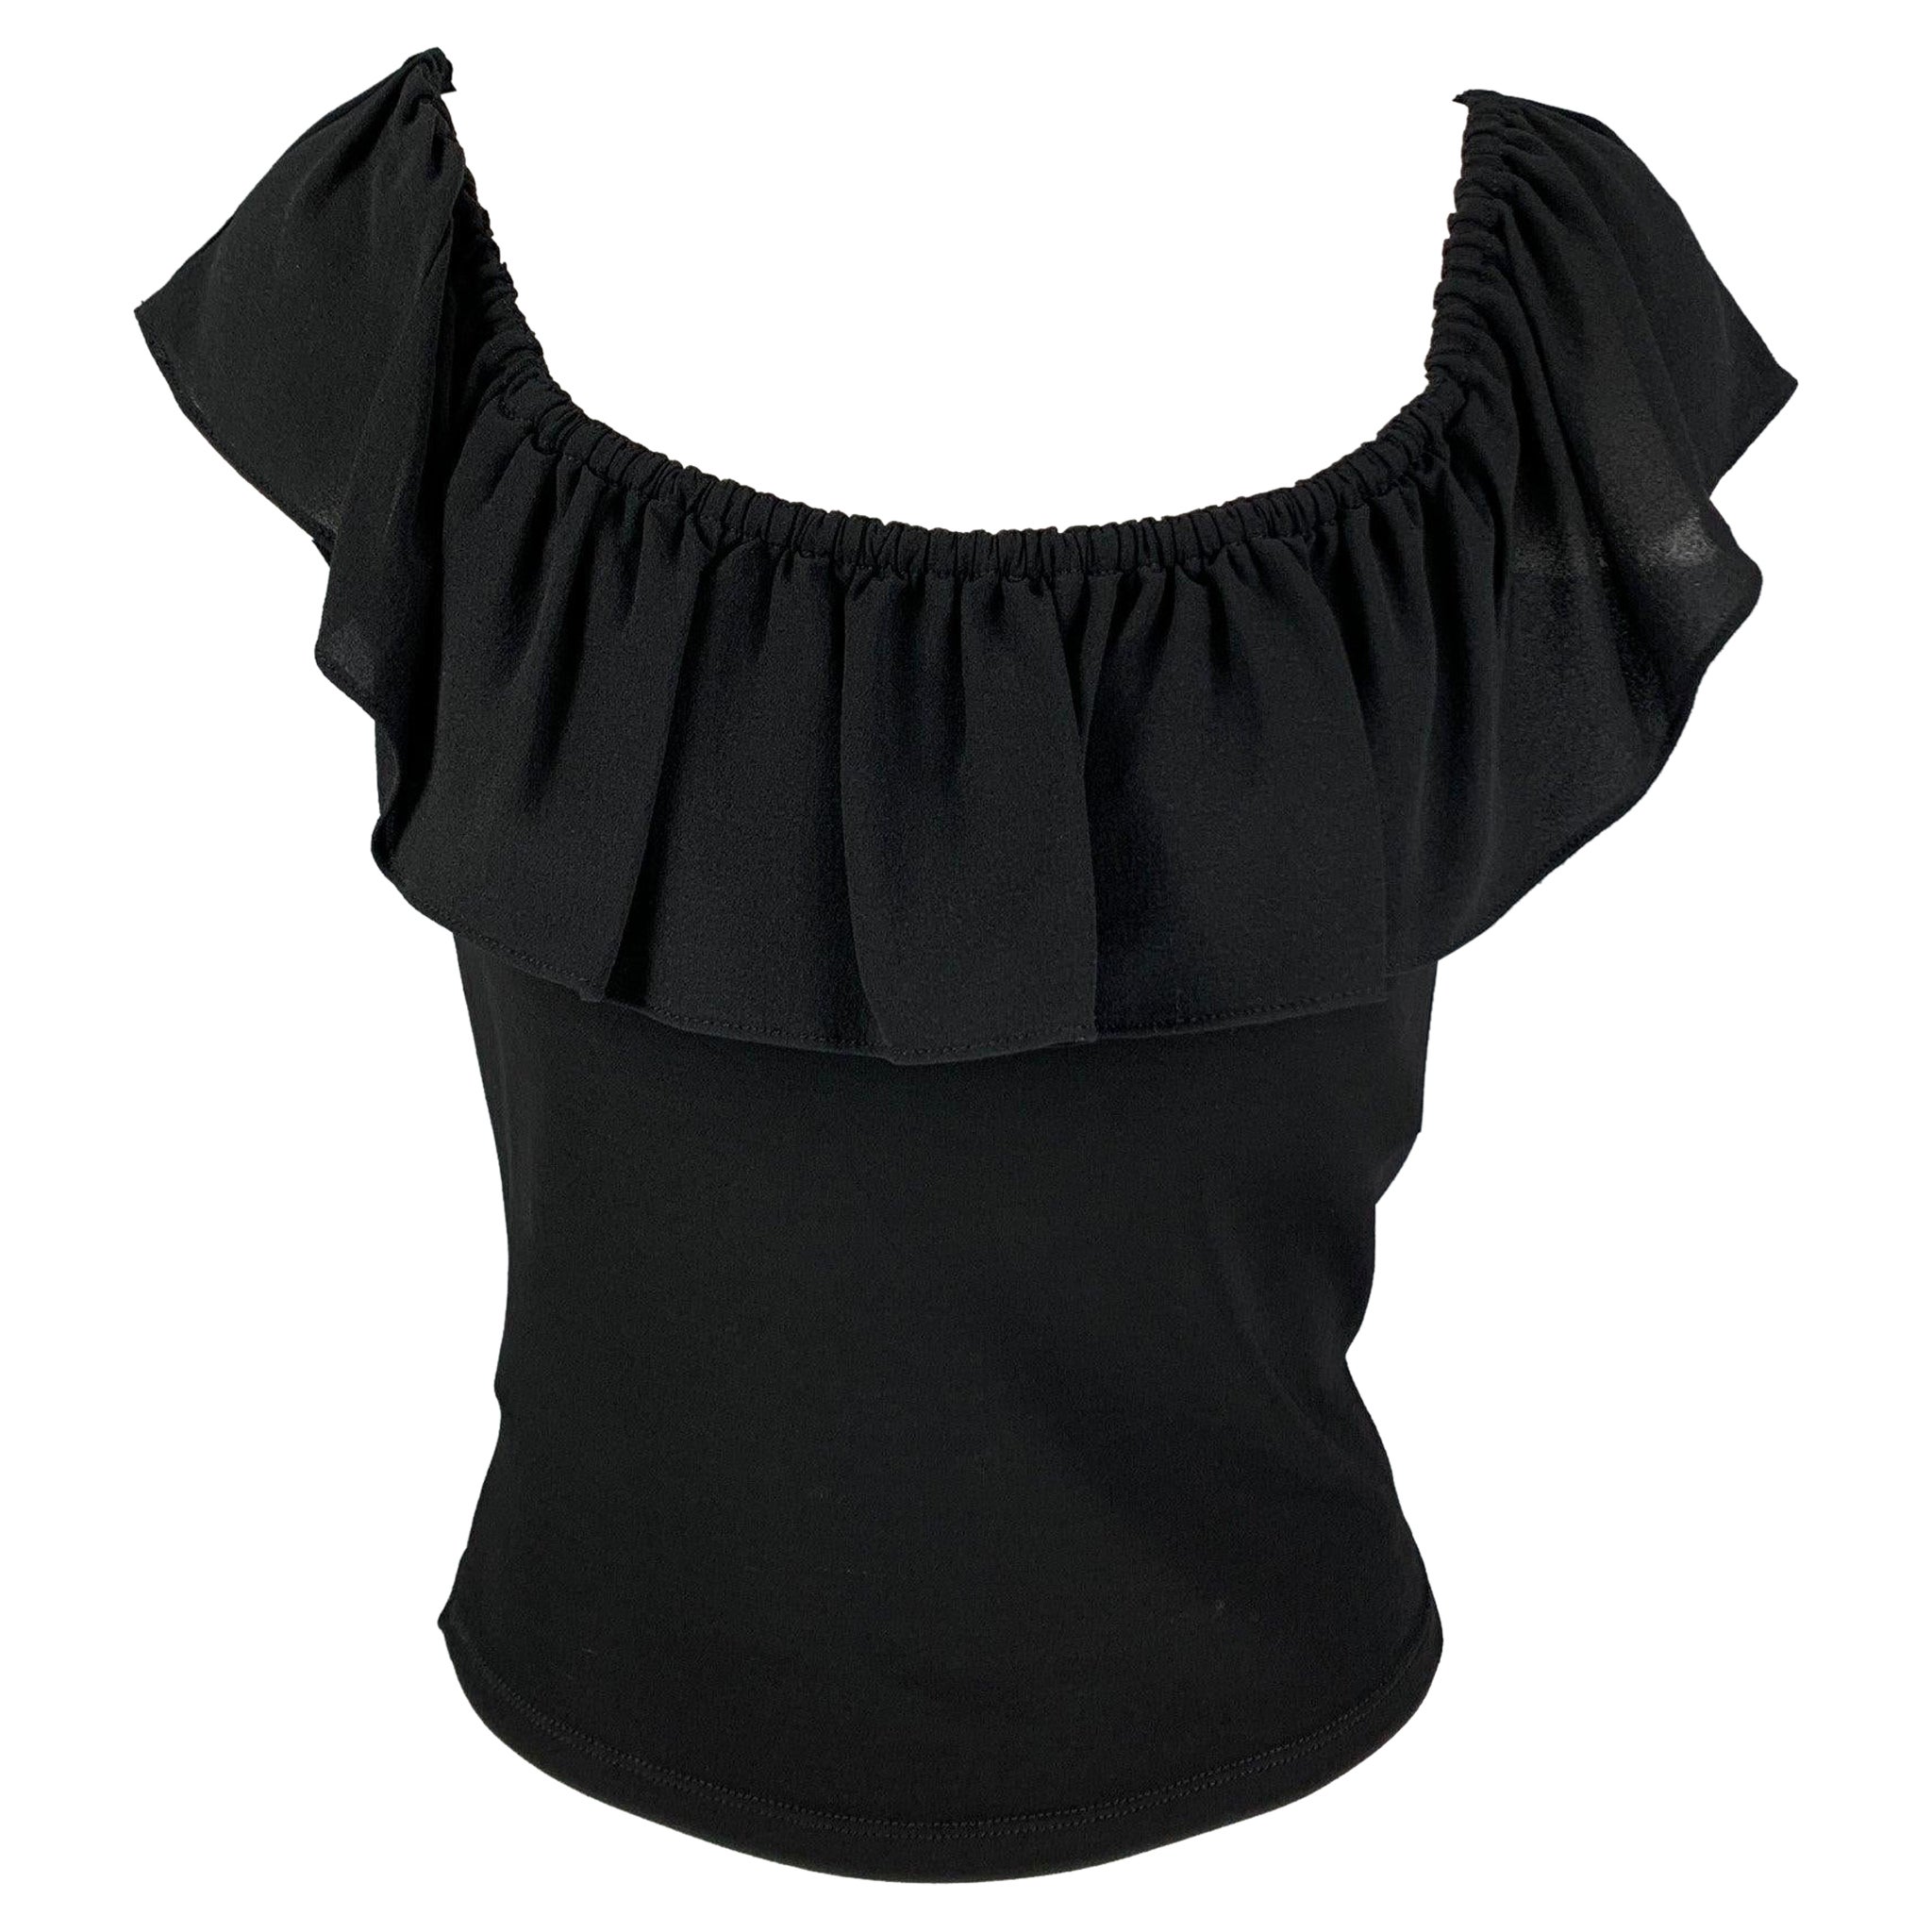 MICHAEL KORS Size 8 Black Rayon Sleeveless Dress Top For Sale